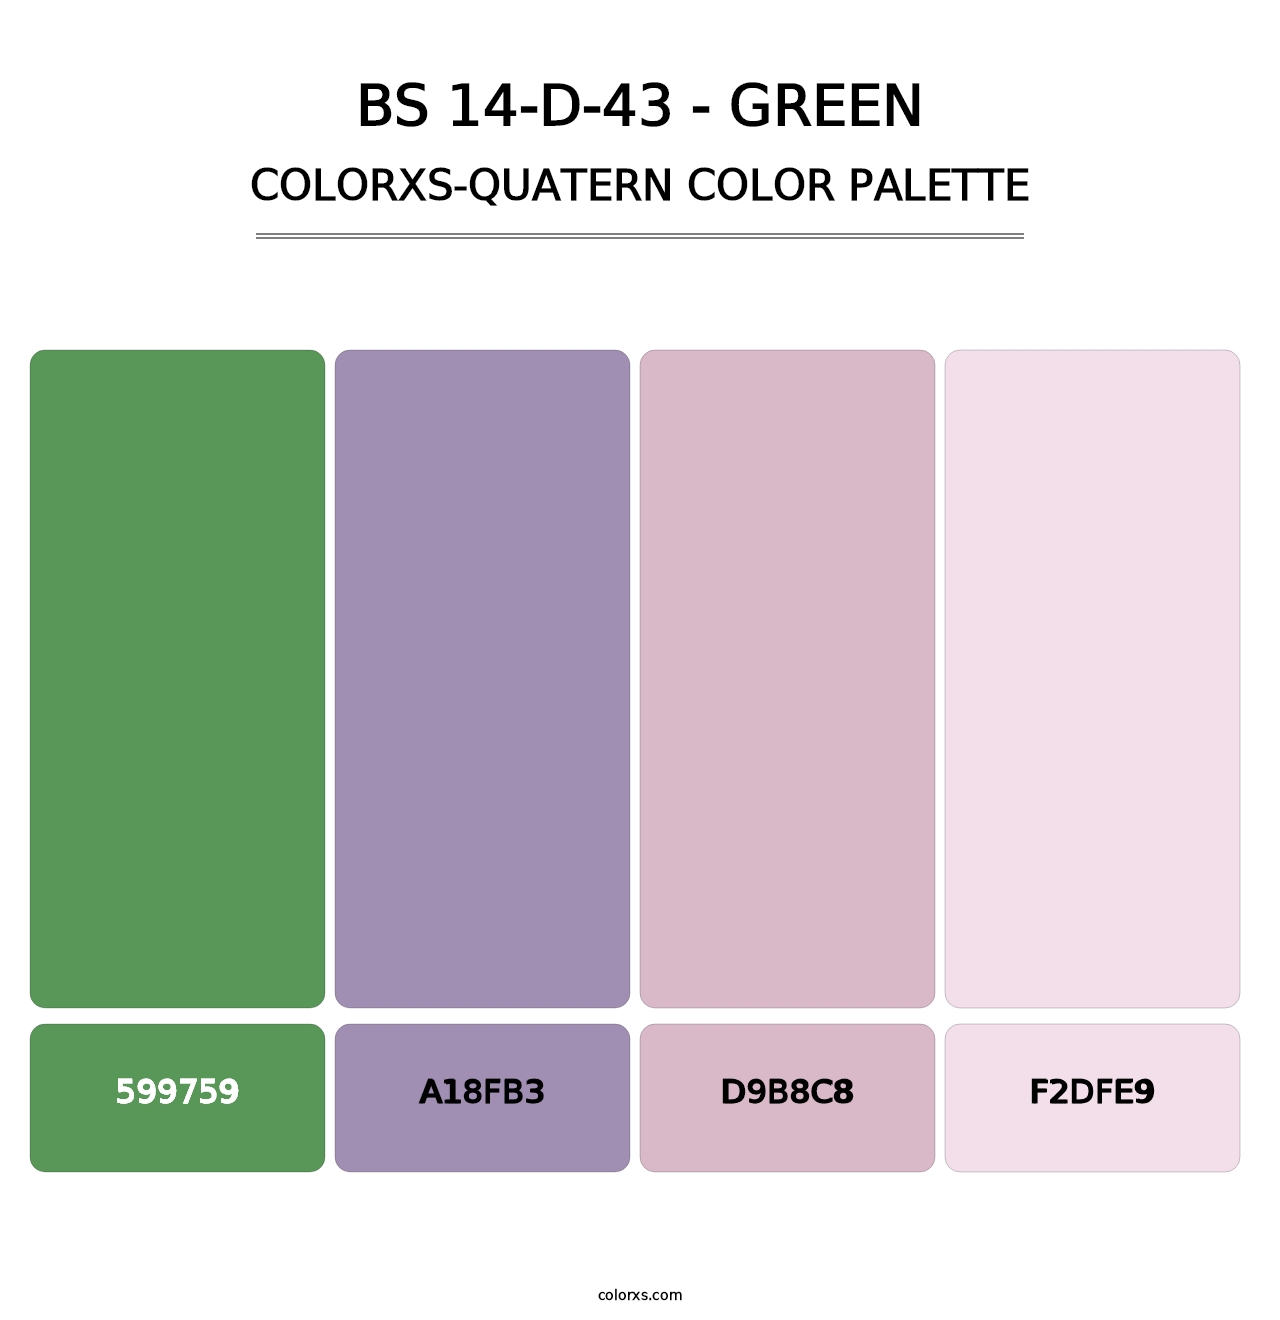 BS 14-D-43 - Green - Colorxs Quatern Palette